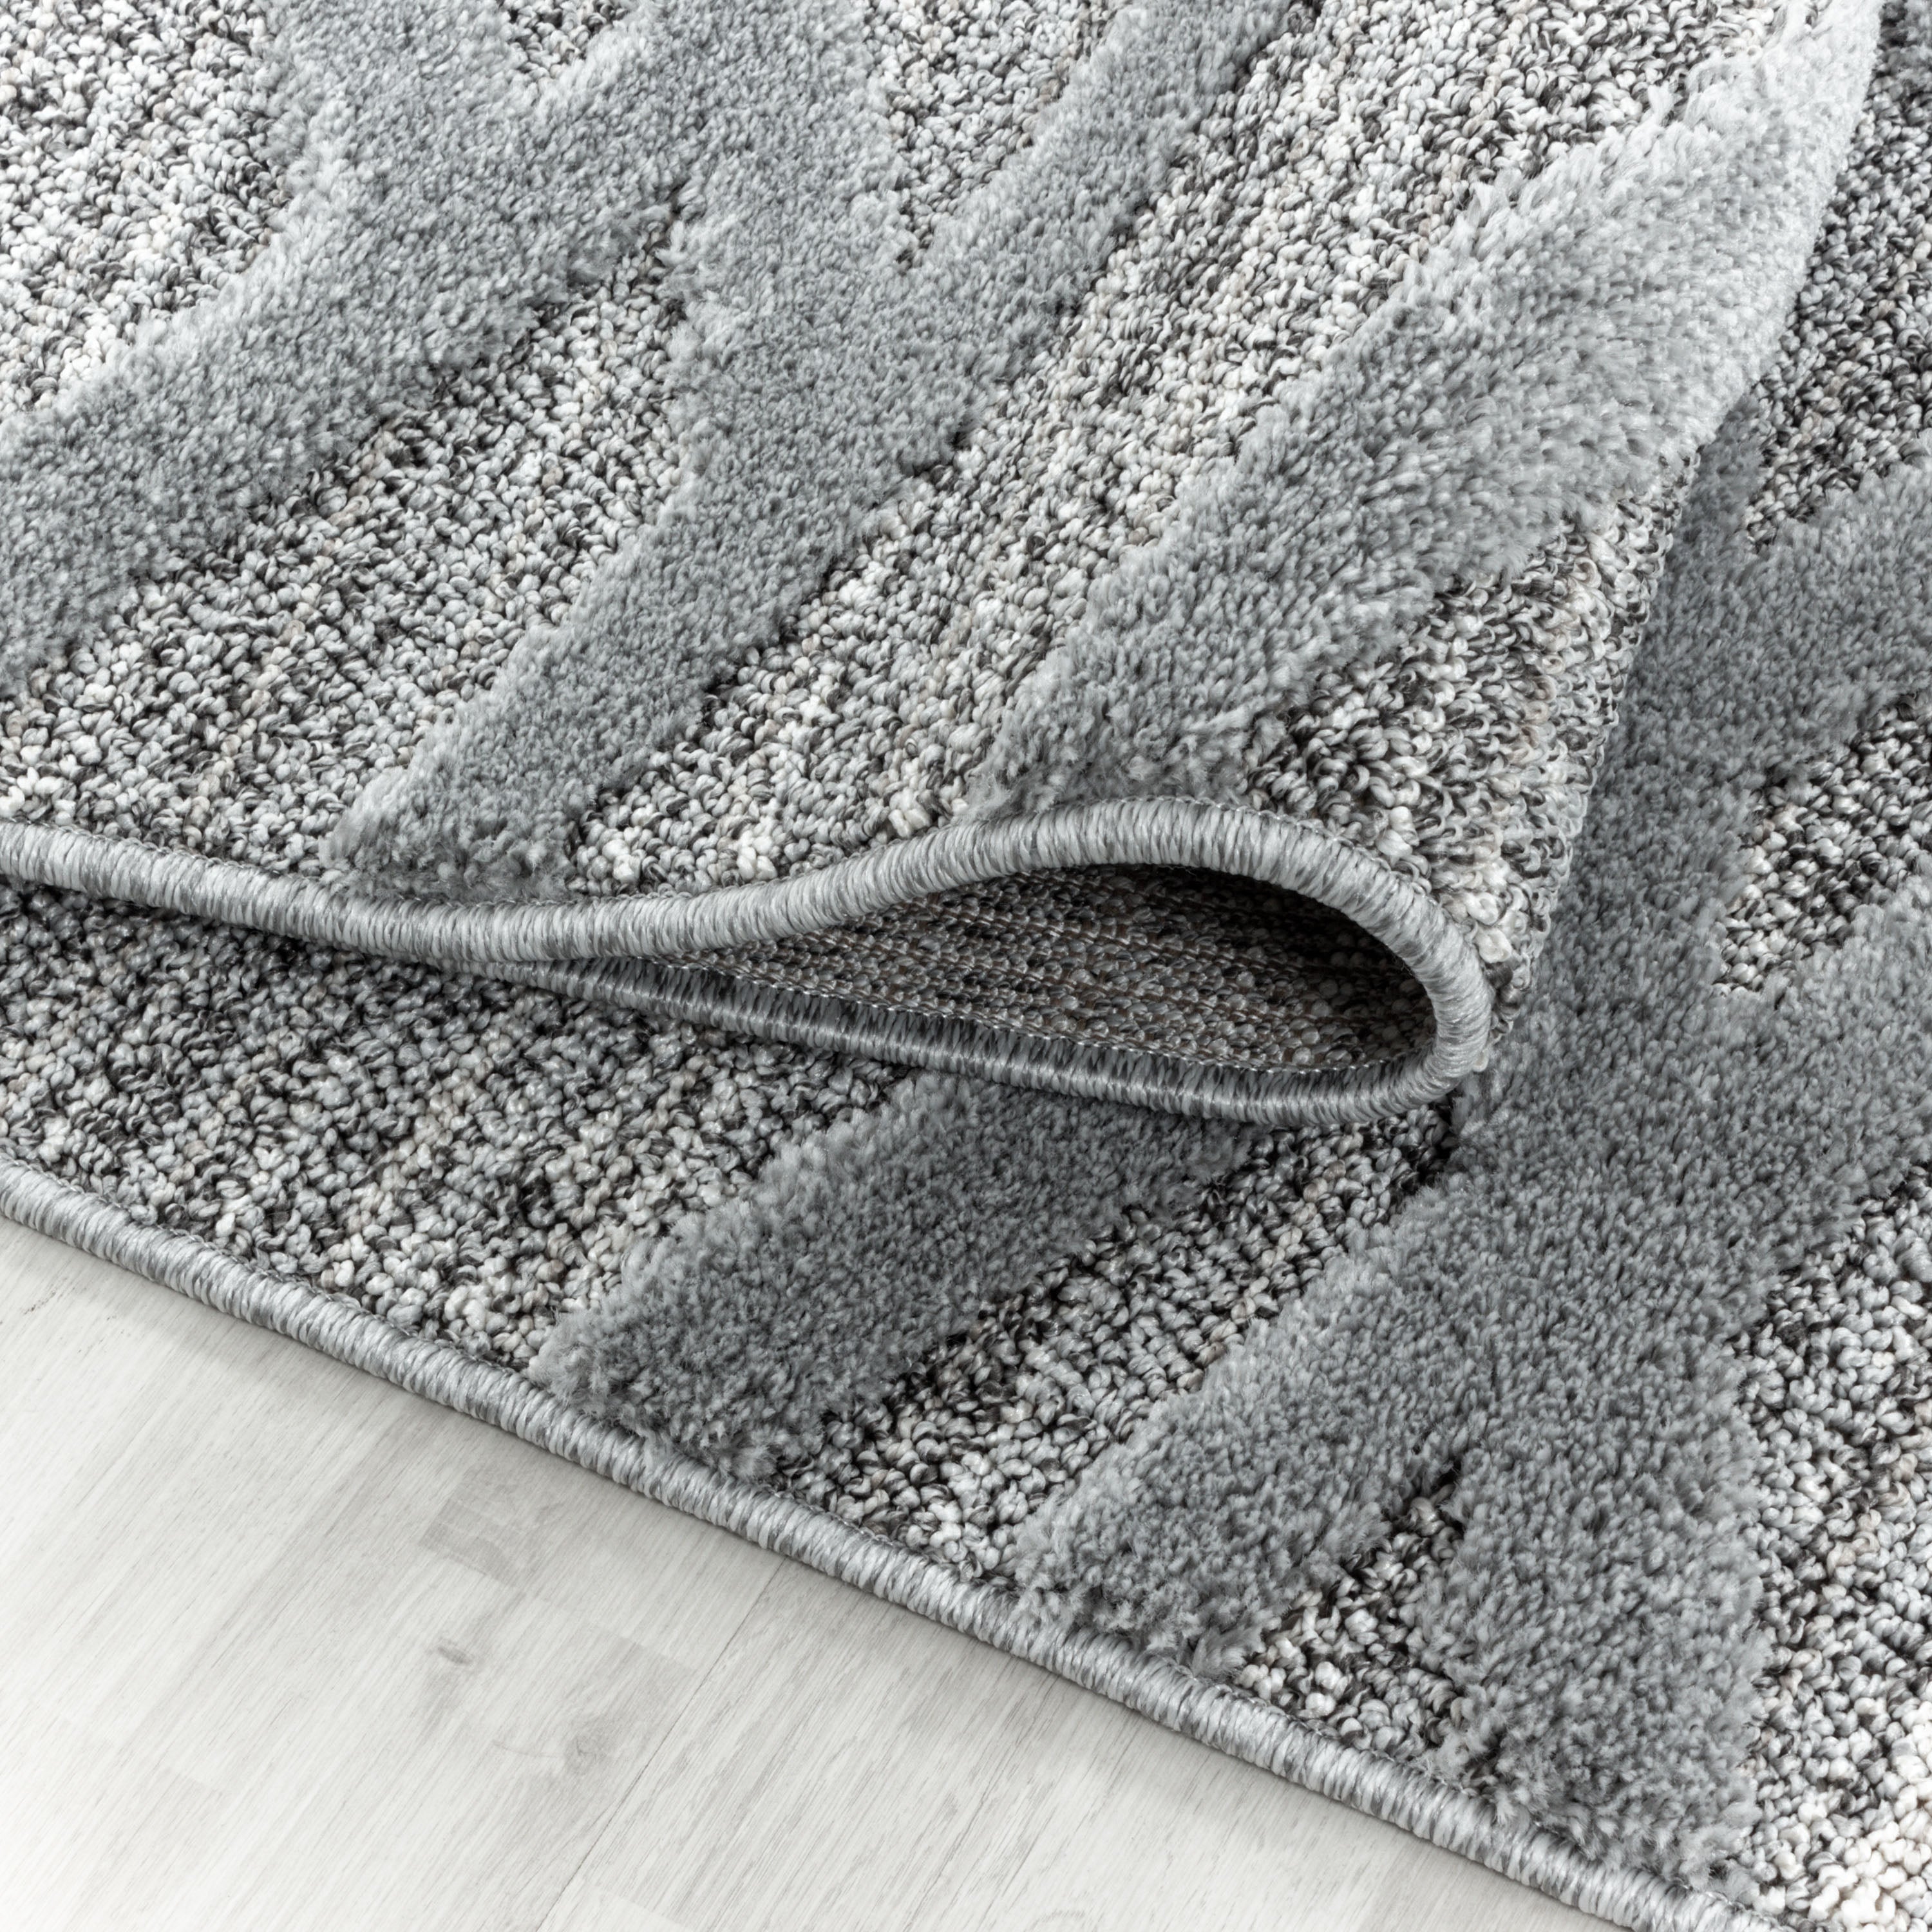 Kurzflor Design Teppich Looped Flor 3-D Linien Gitter Muster